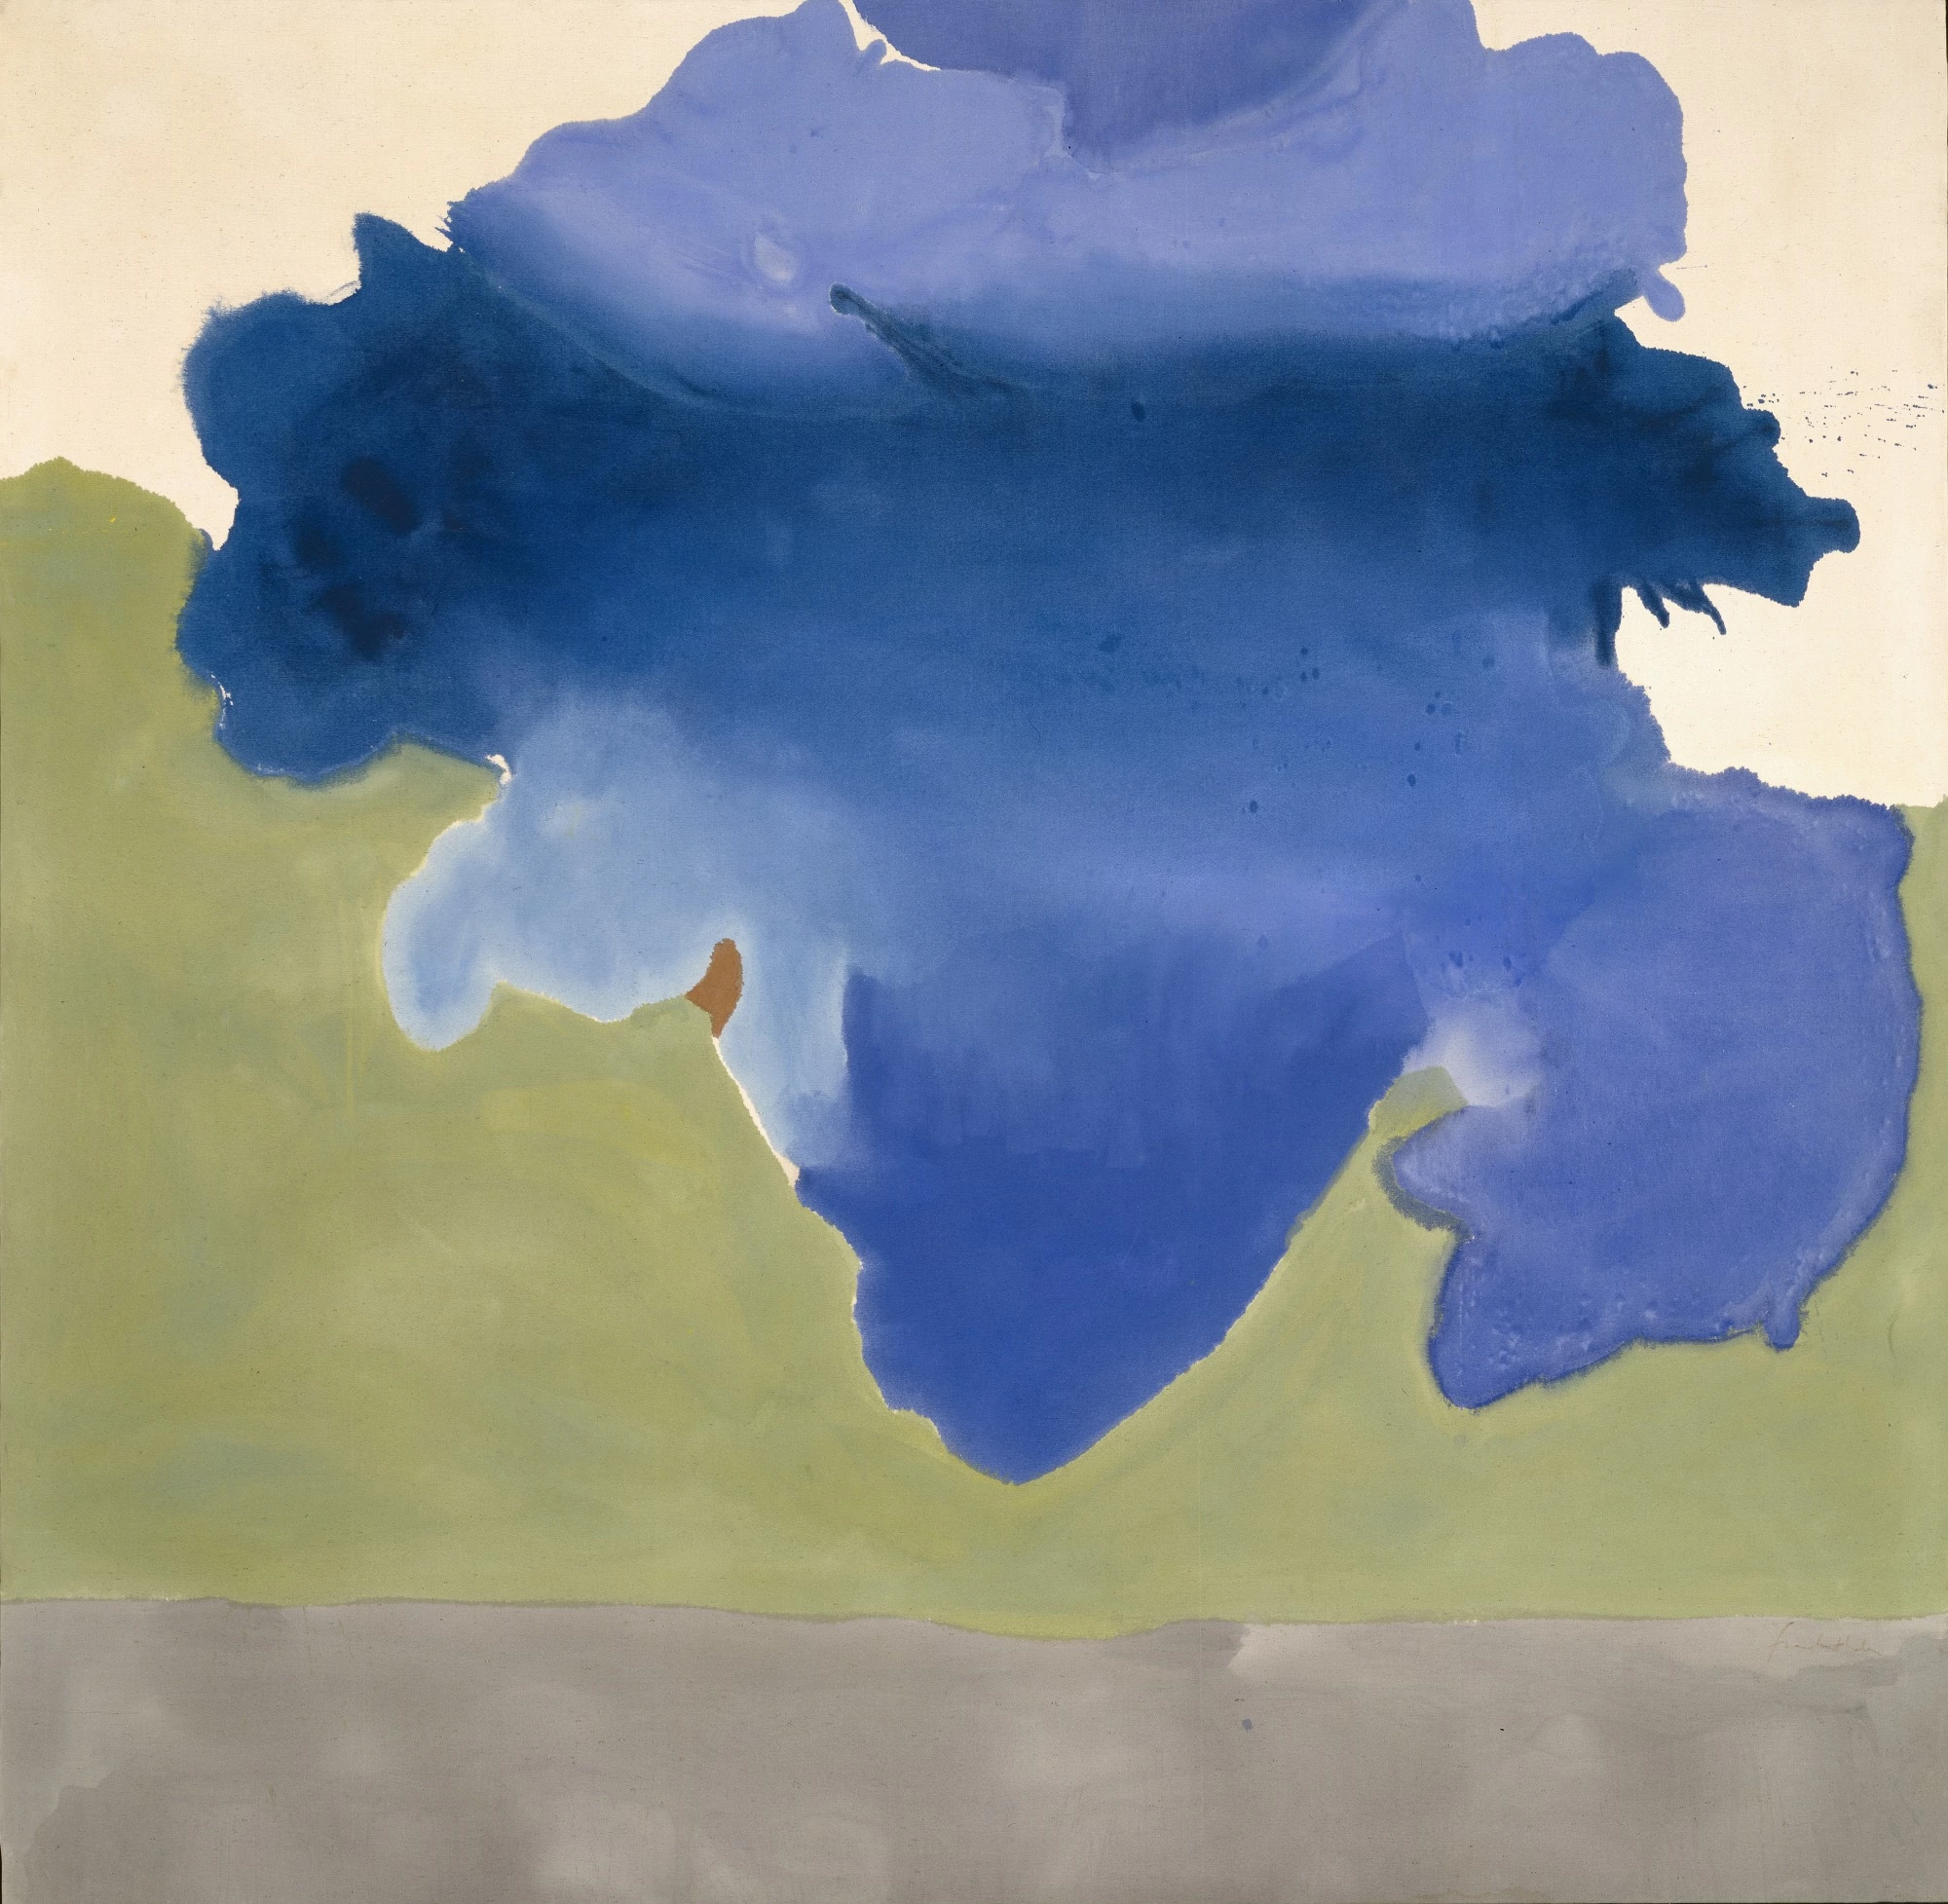 The Bay, Helen Frankenthaler